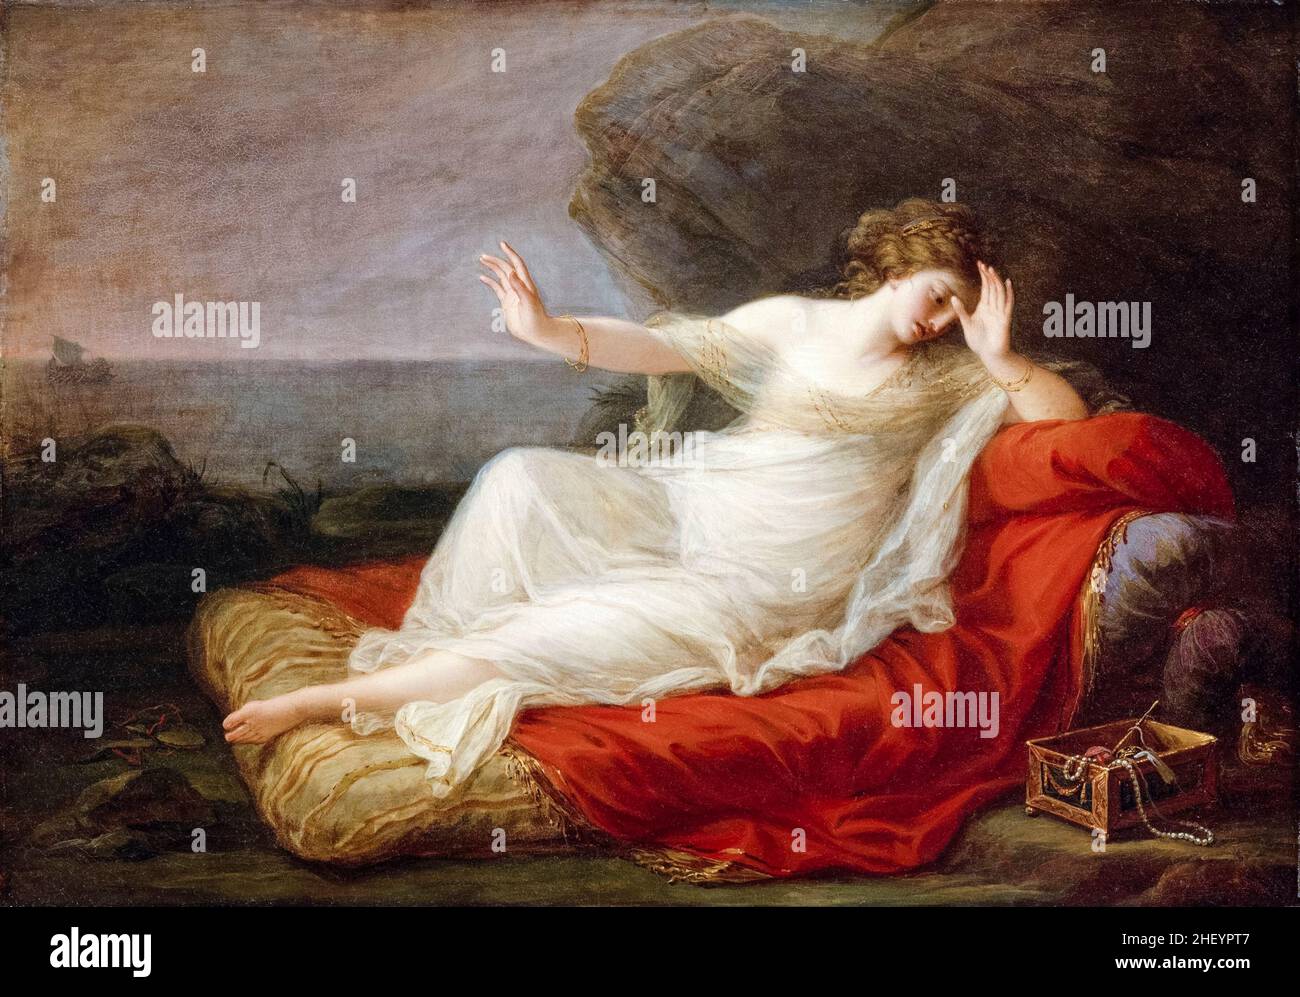 Angelica Kauffman. Arianna abbandonata da Teseo, pittura della pittrice neoclassica svizzera Angelica Kauffmann, 1774 Foto Stock